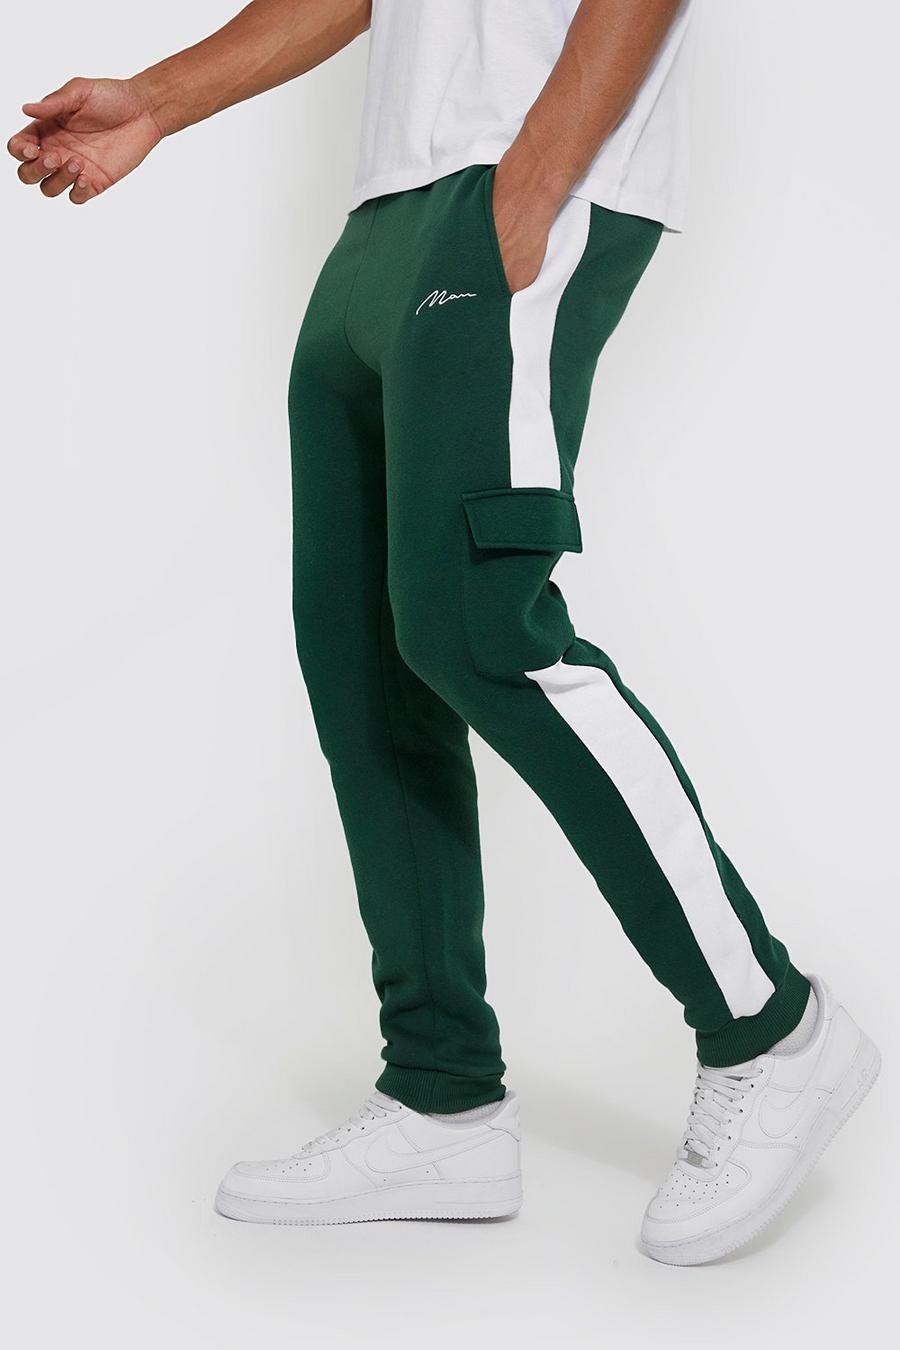 Dark green מכנסי ריצה בגזרת סקיני ובסגנון דגמ"ח עם כיתוב Man, לגברים גבוהים image number 1